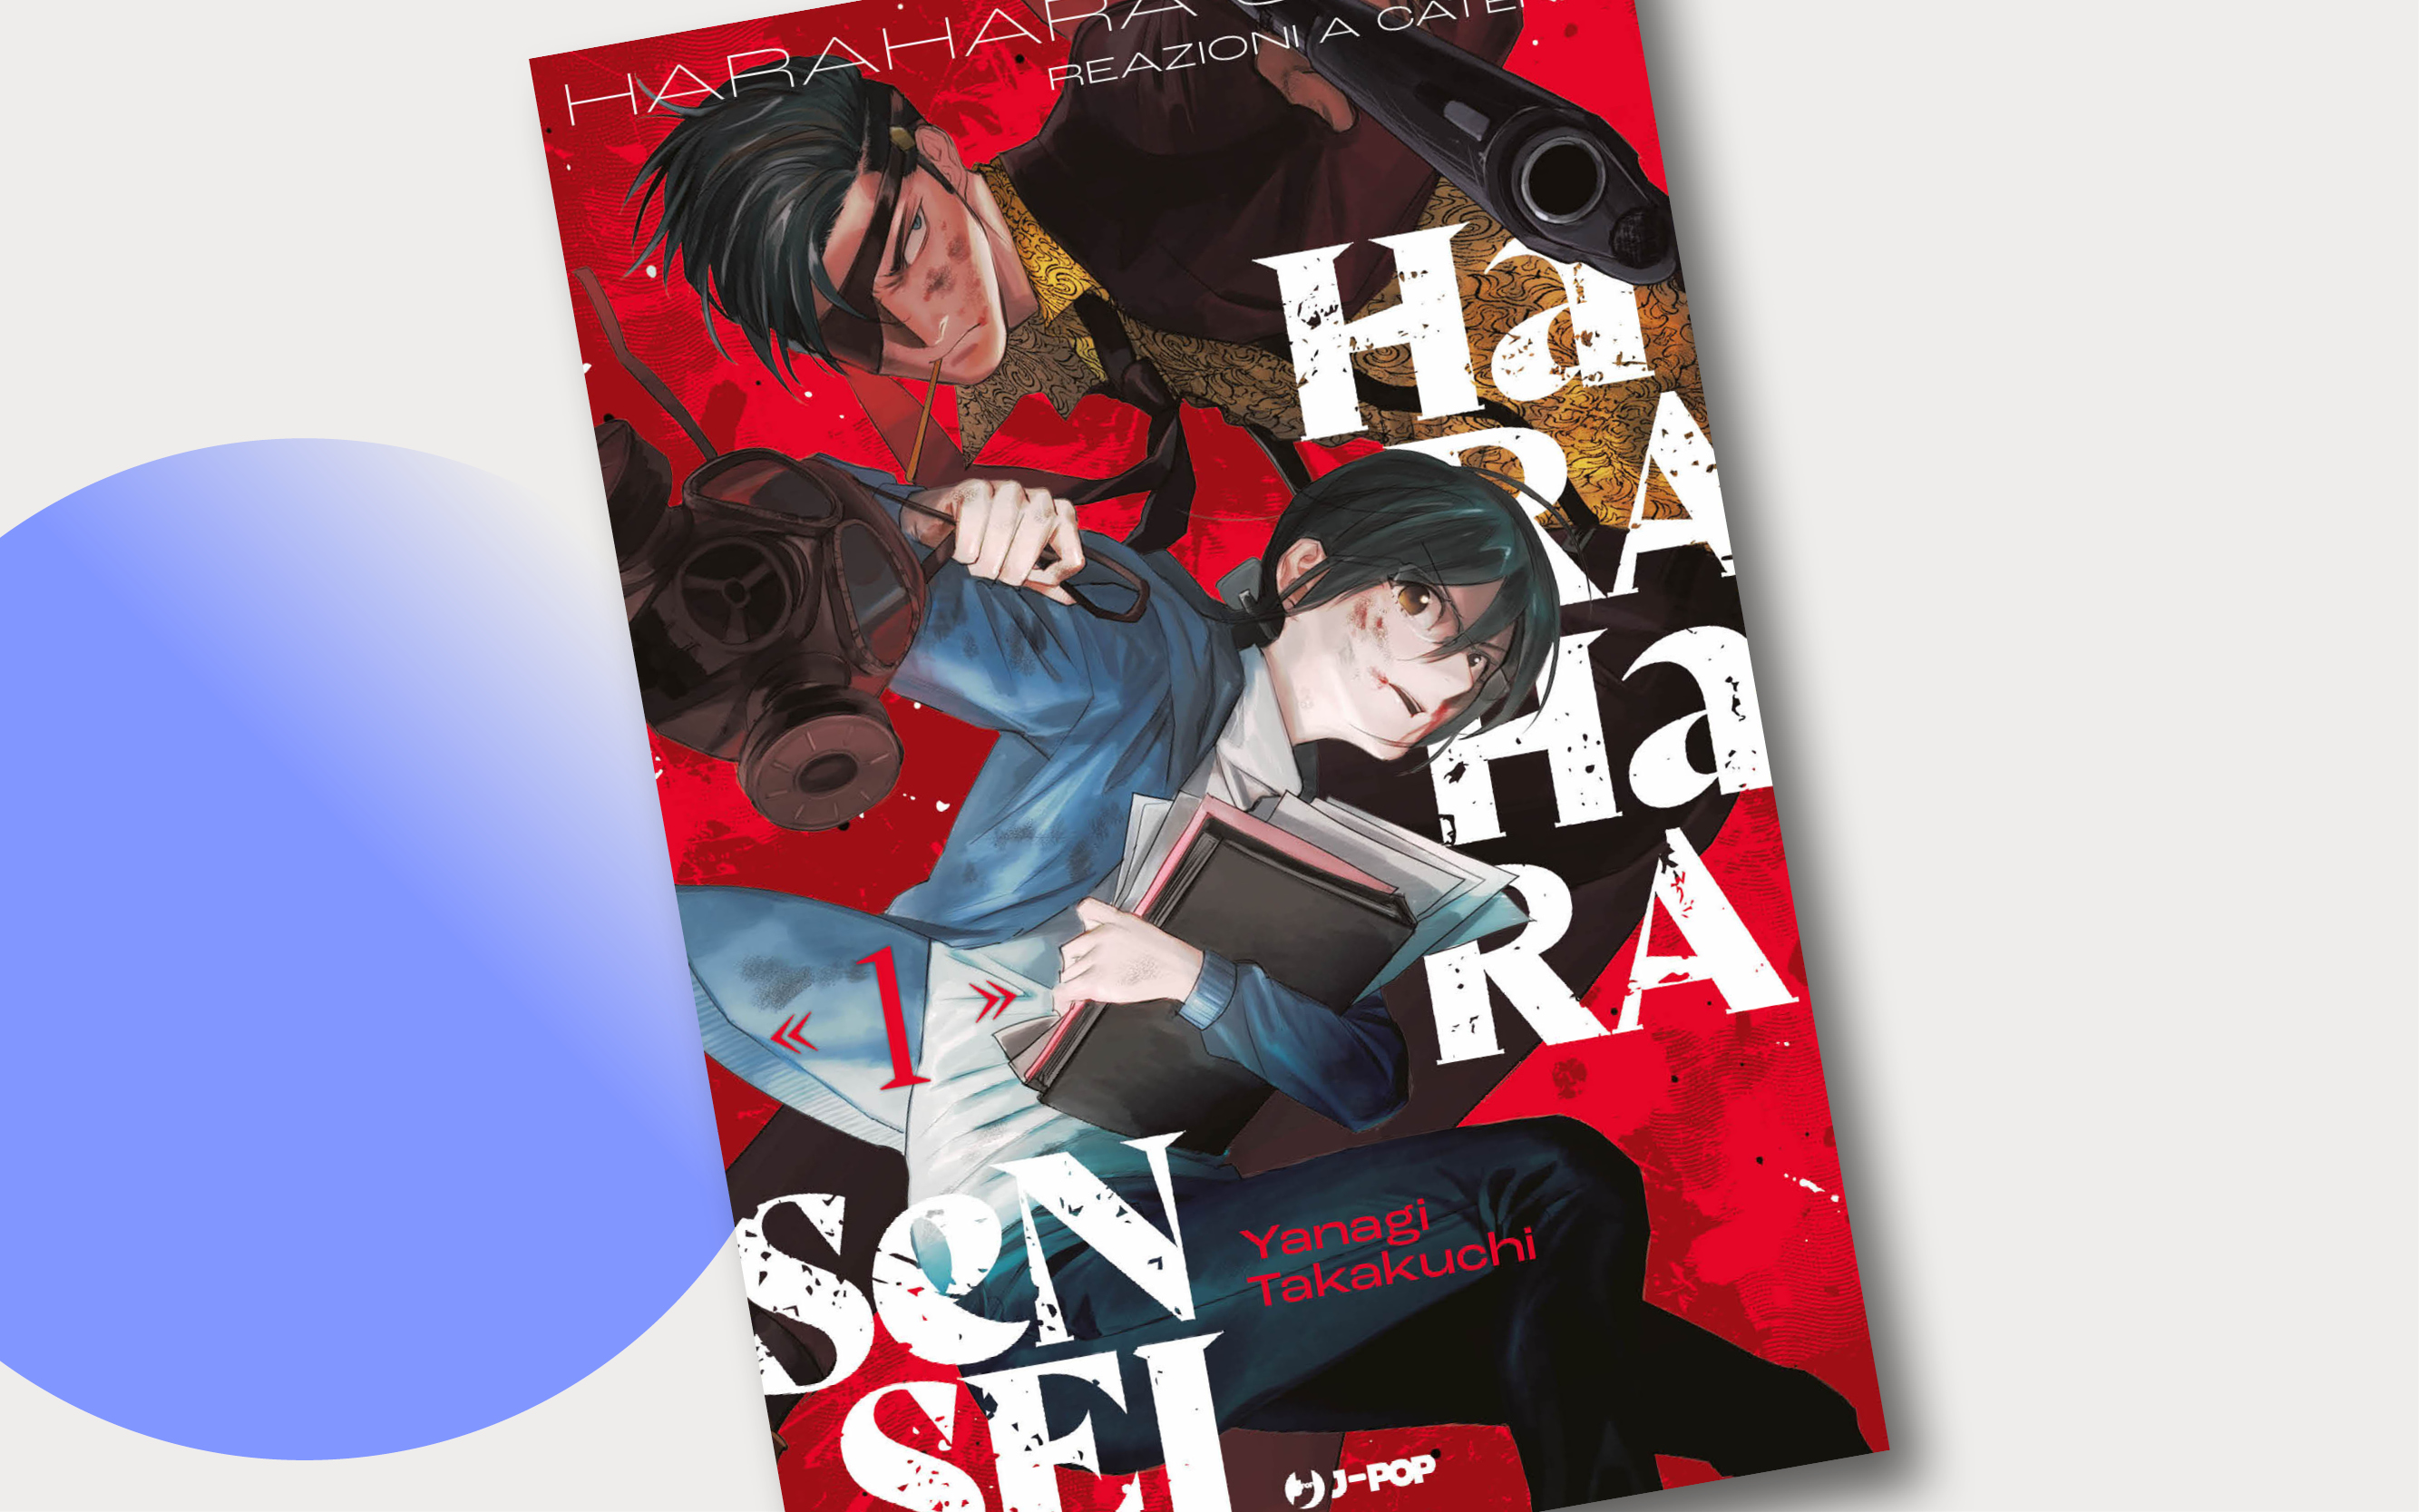 J-POP Manga presenta  Hara Hara Sensei – Reazioni a Catena  di Yanagi Takakuchi 